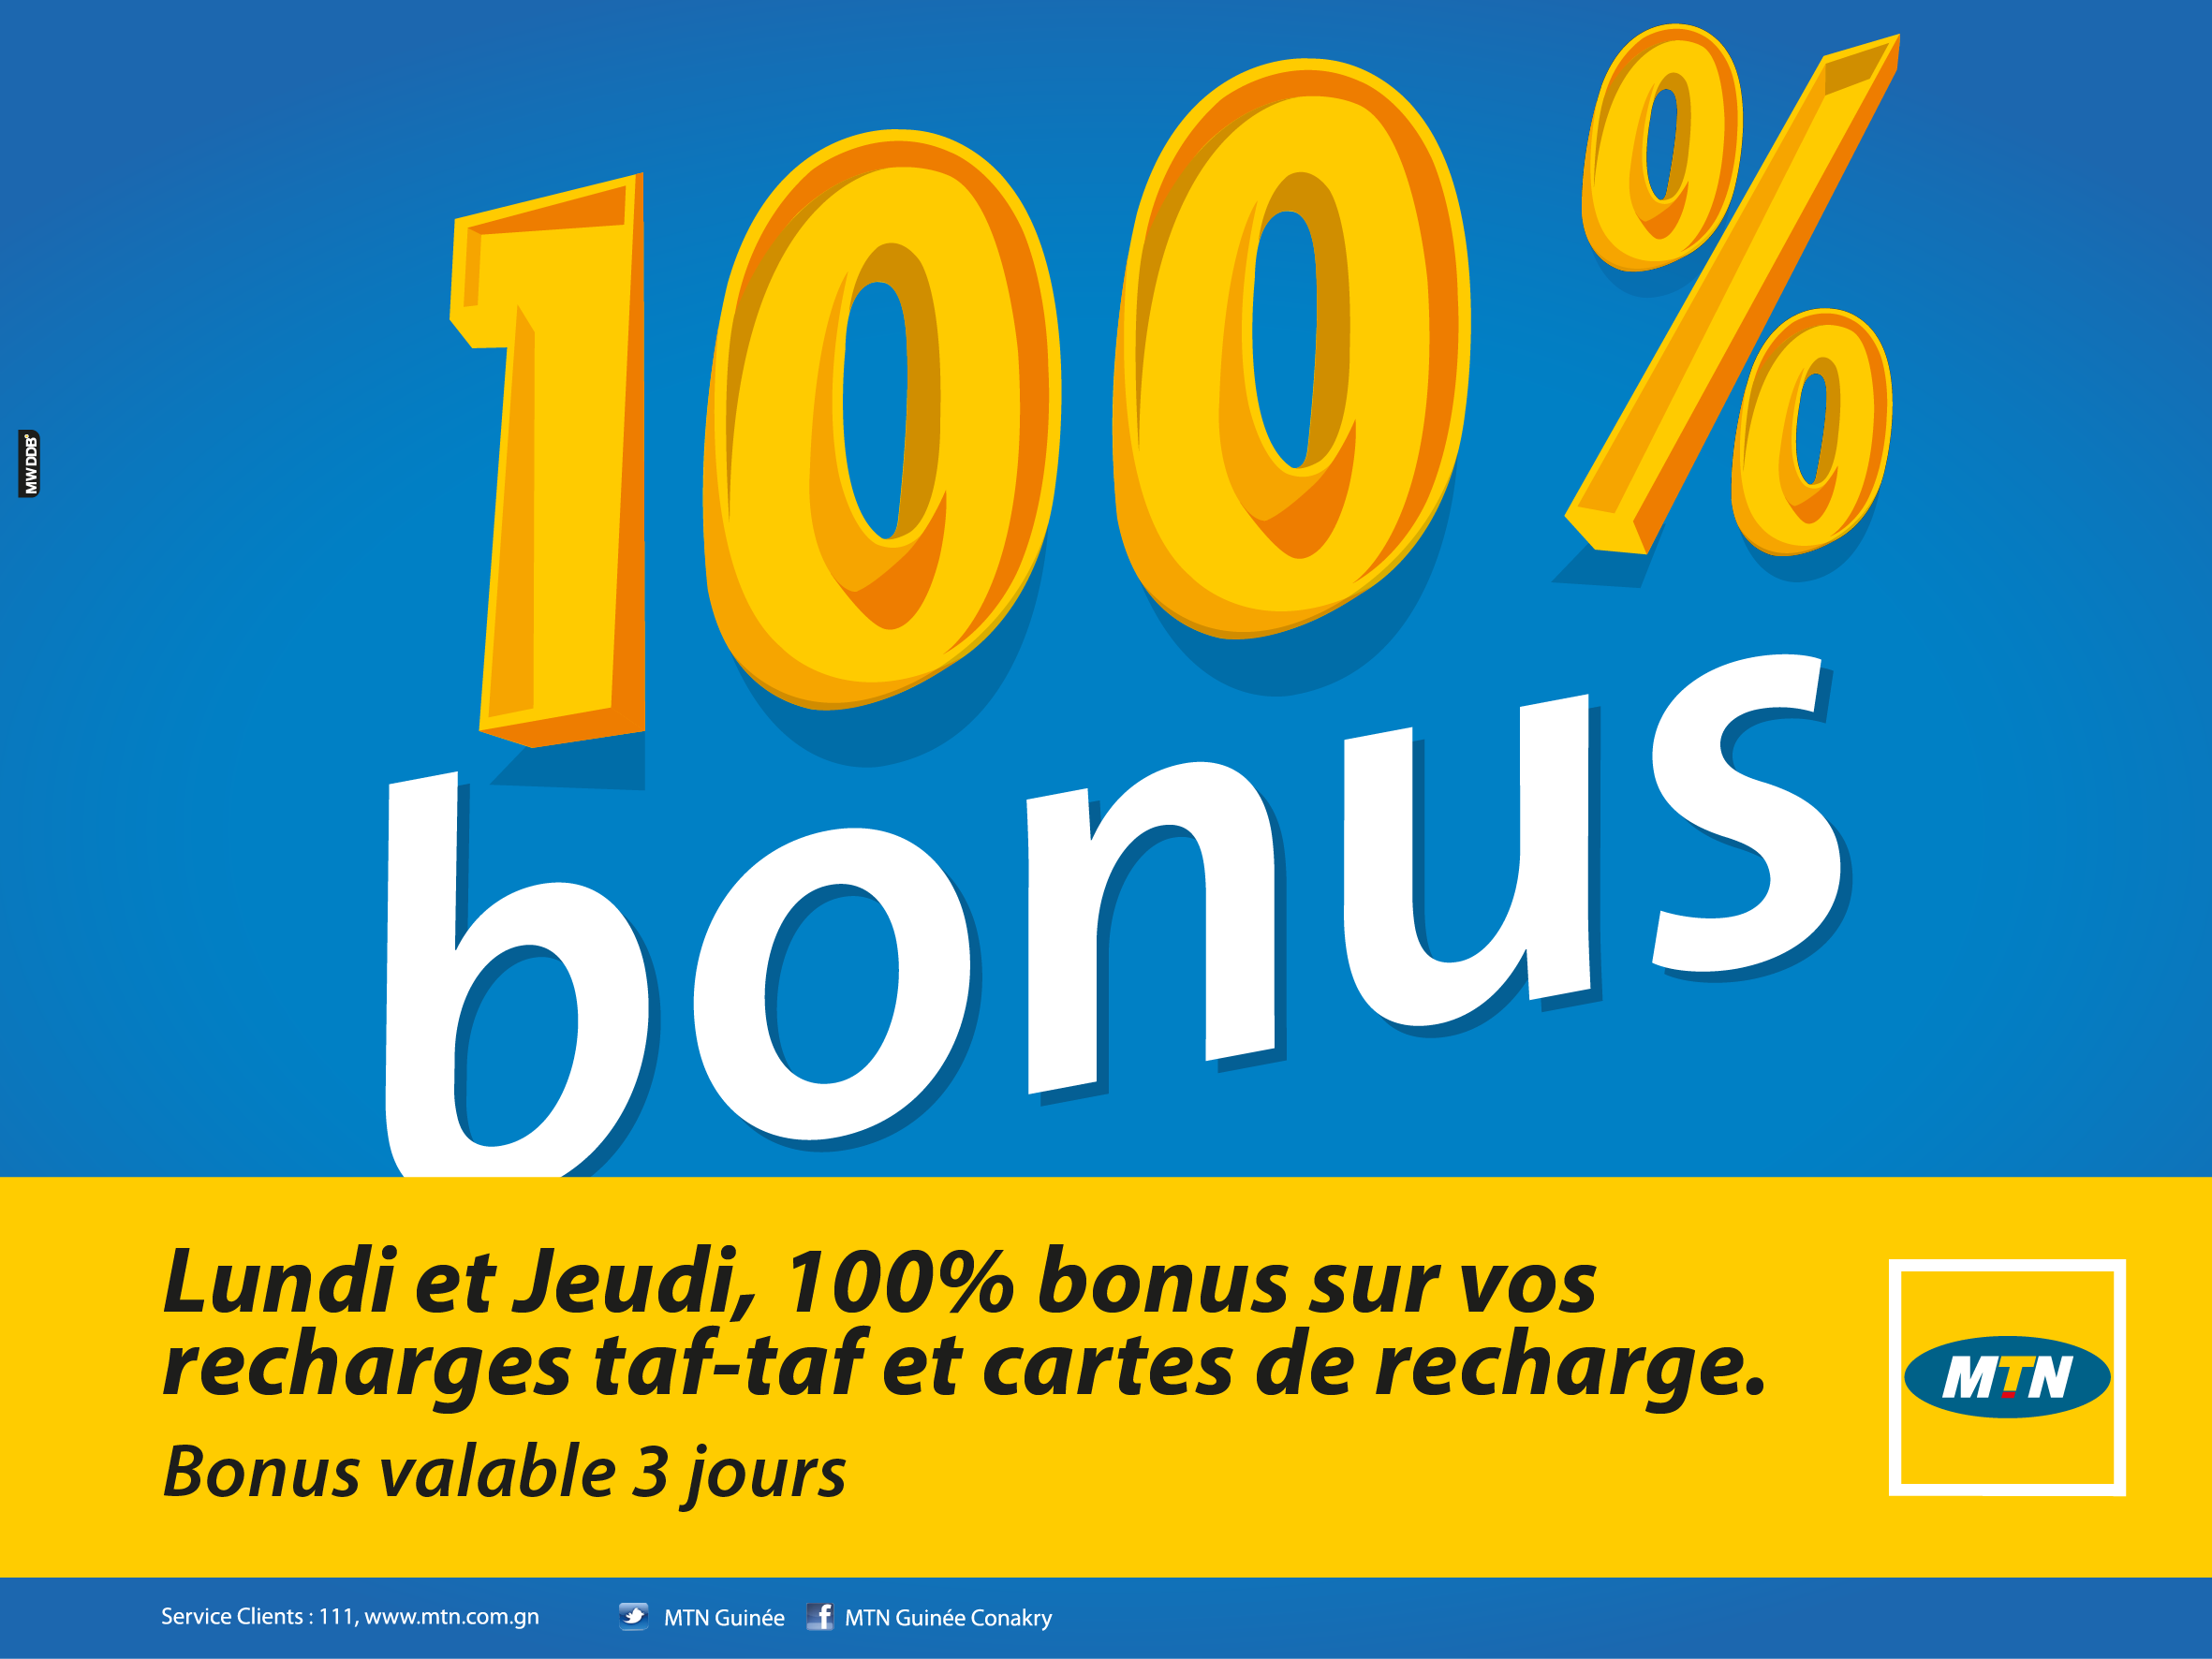 mtn_100_recharge_bonus_janvier_-_lundijeudi-04